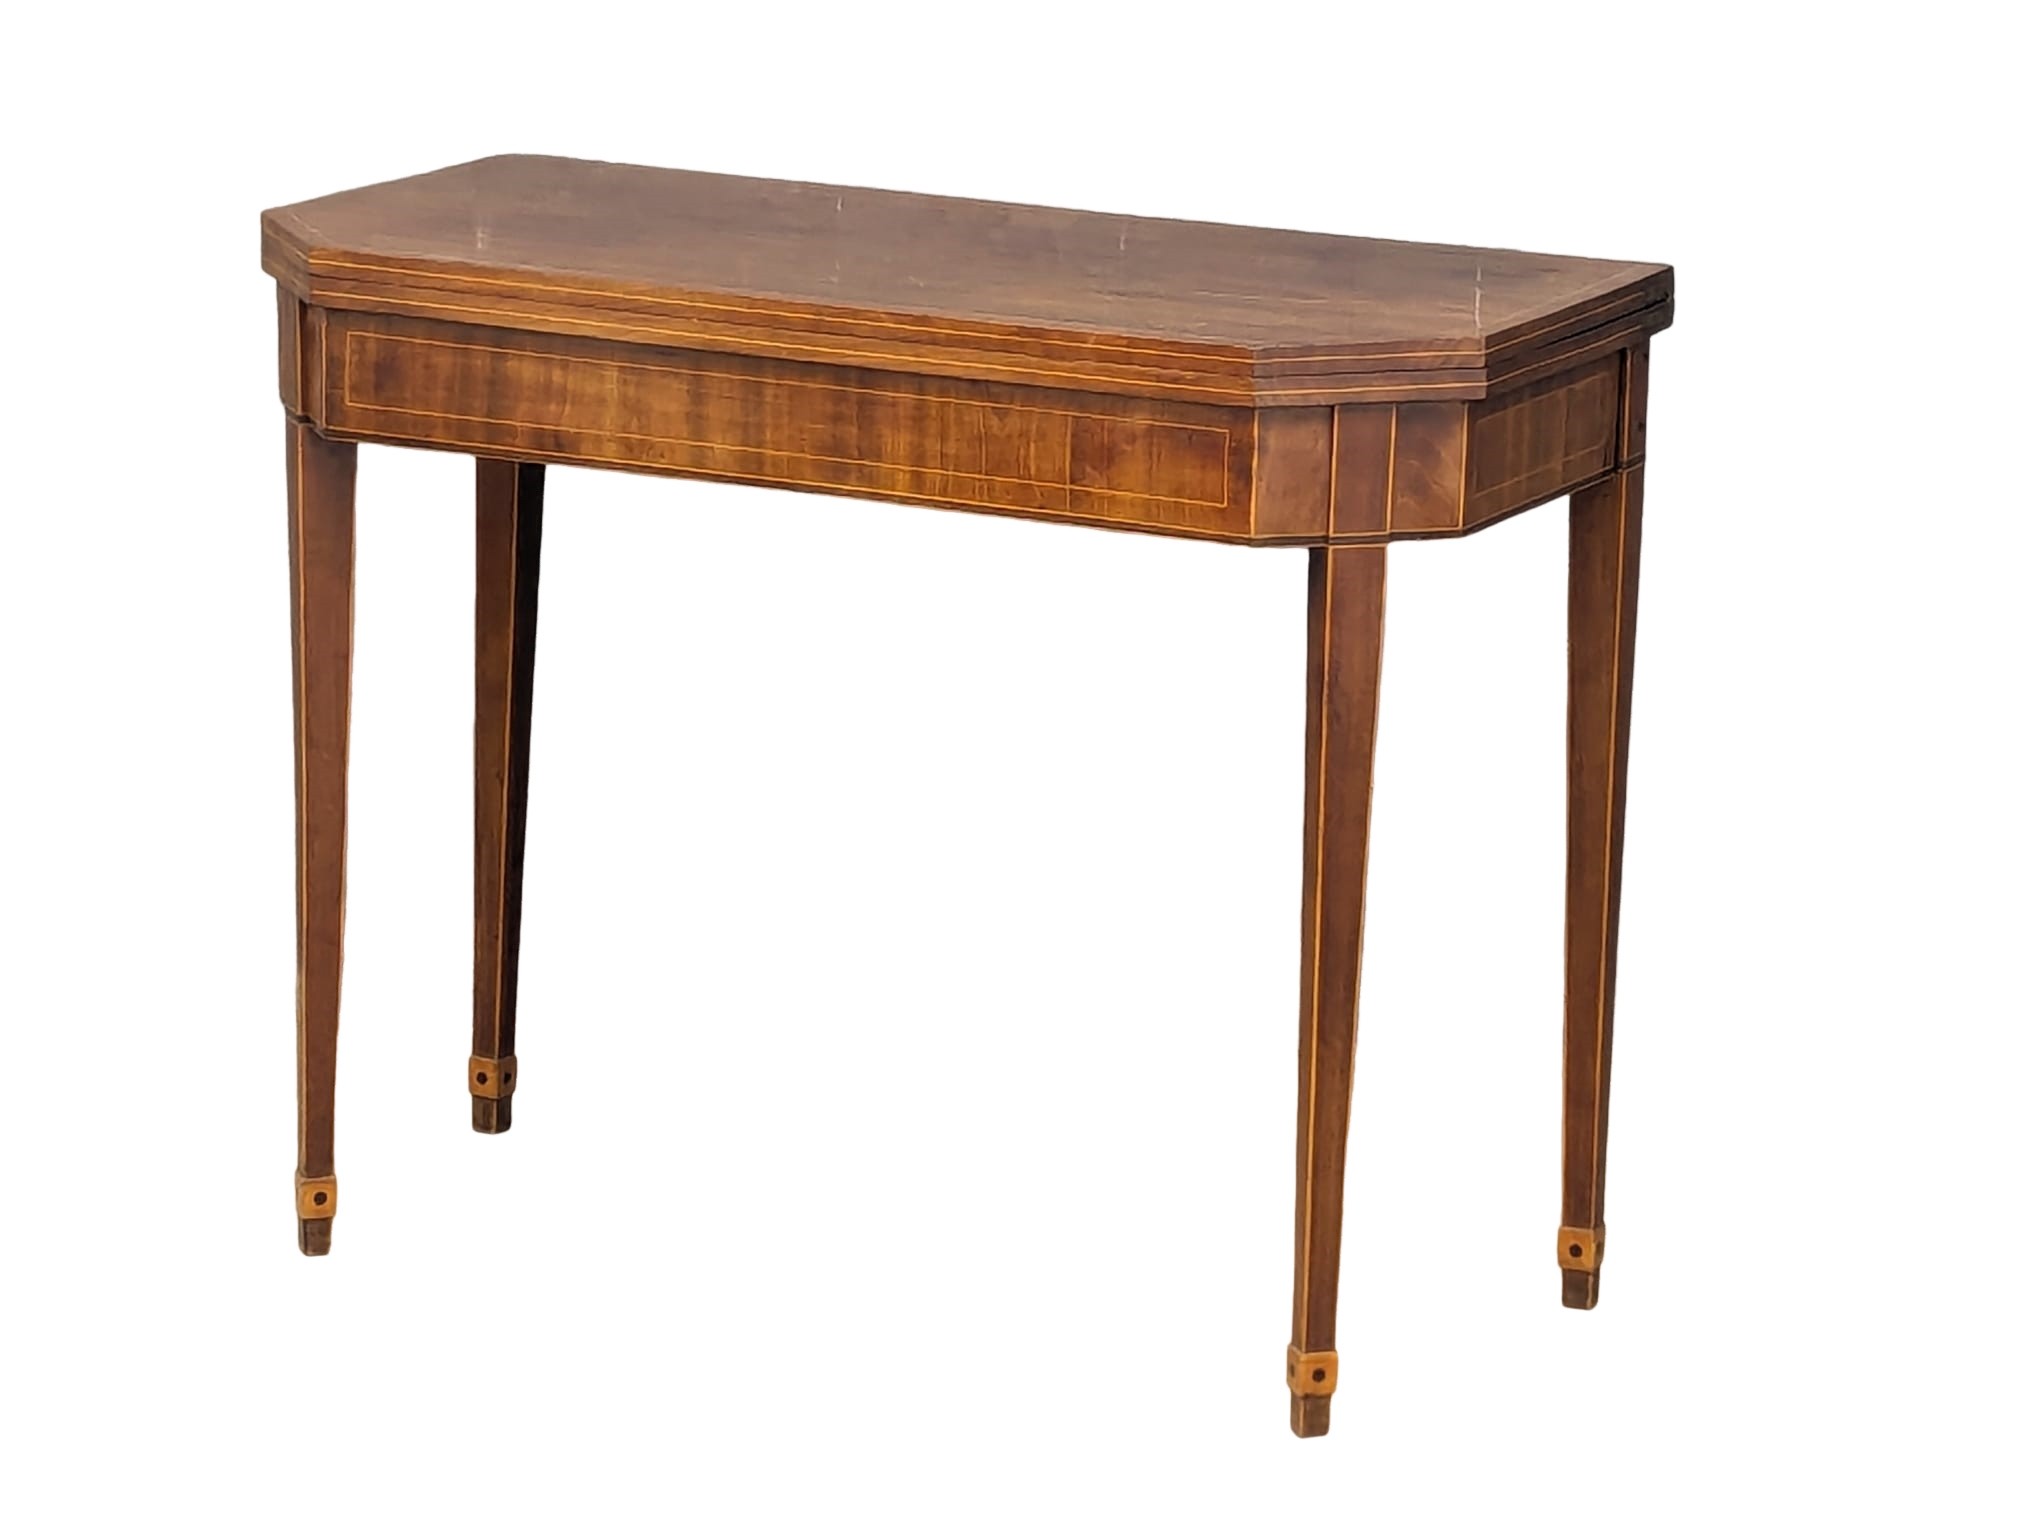 A George III Sheraton style inlaid mahogany turnover tea table. Circa 1800. 92x44x73.5cm